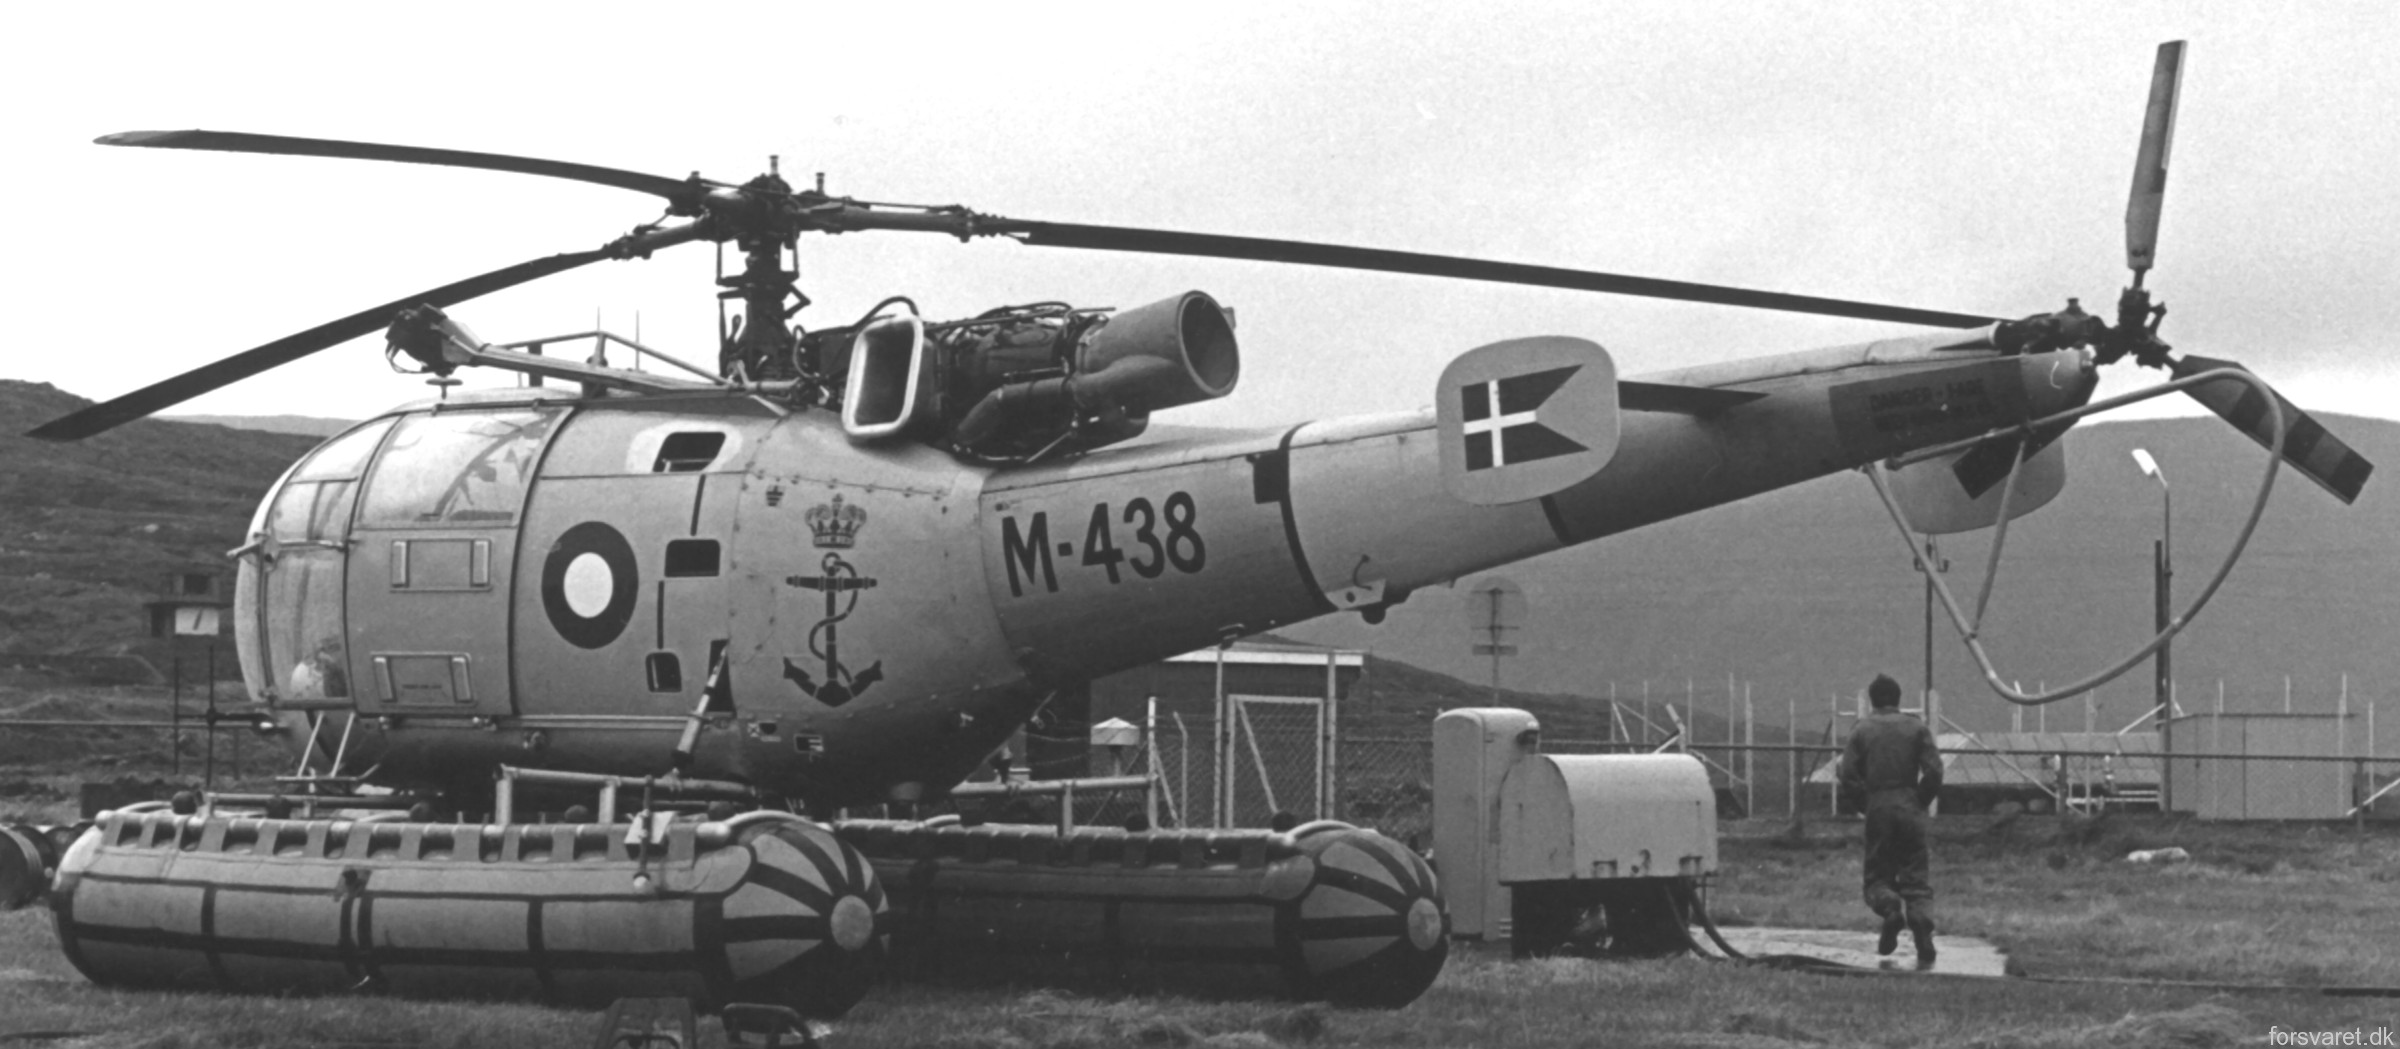 sa 316b alouette iii helicopter royal danish navy søværnet kongelige danske marine sud aviation m-438 04